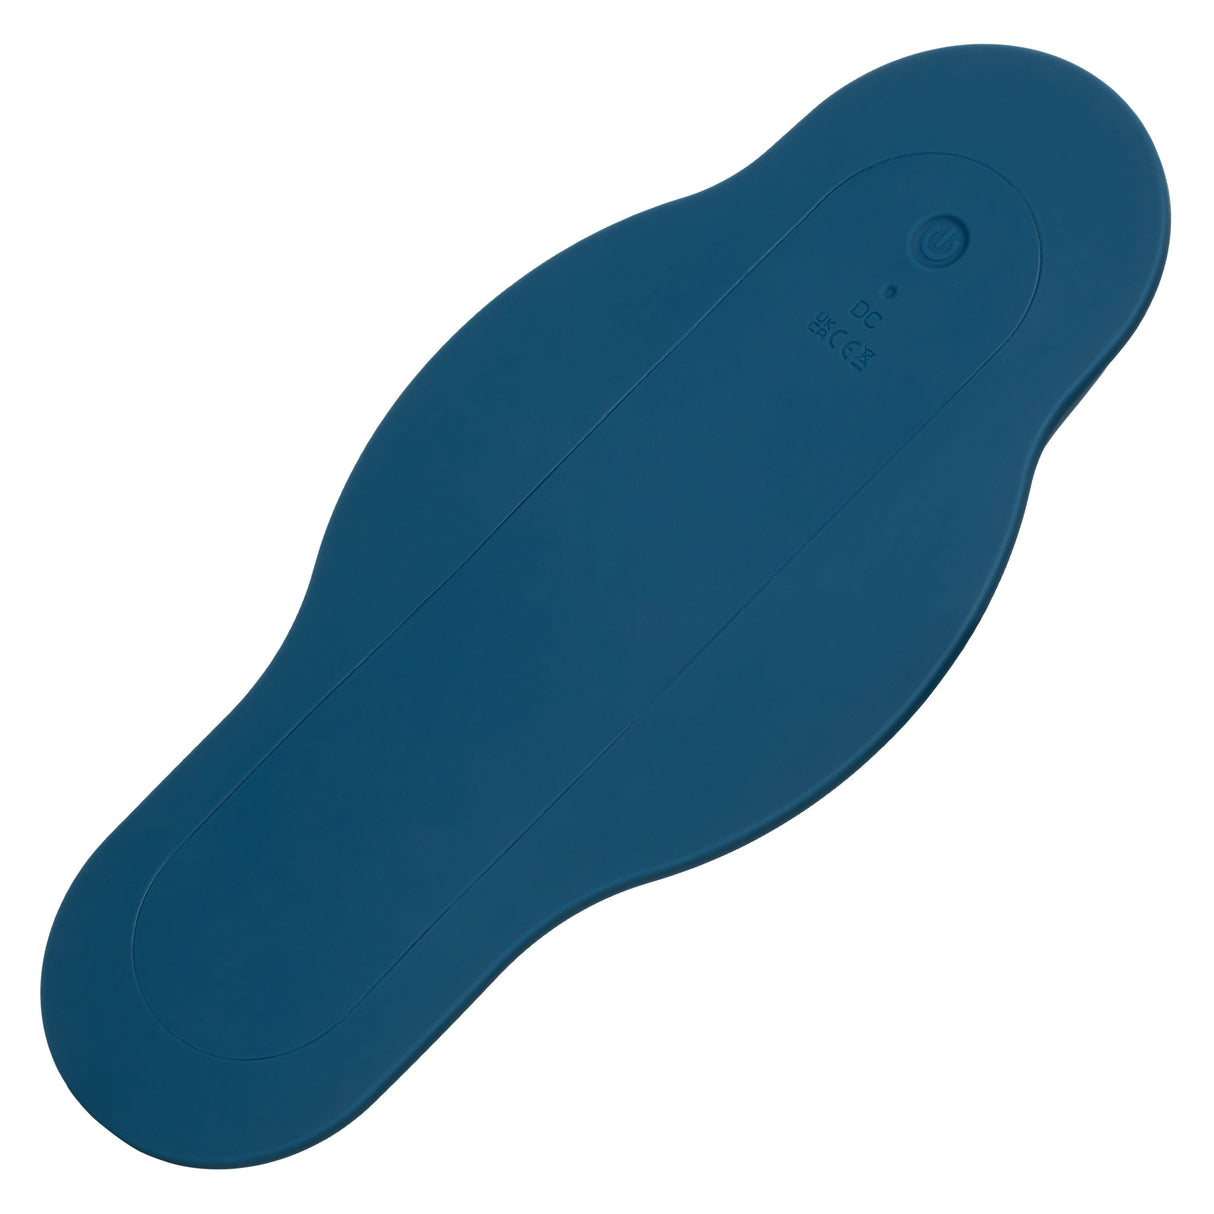 California Exotics - Dual Rider Remote Control Bump & Grind Clit Massager (Blue) CE2014 CherryAffairs